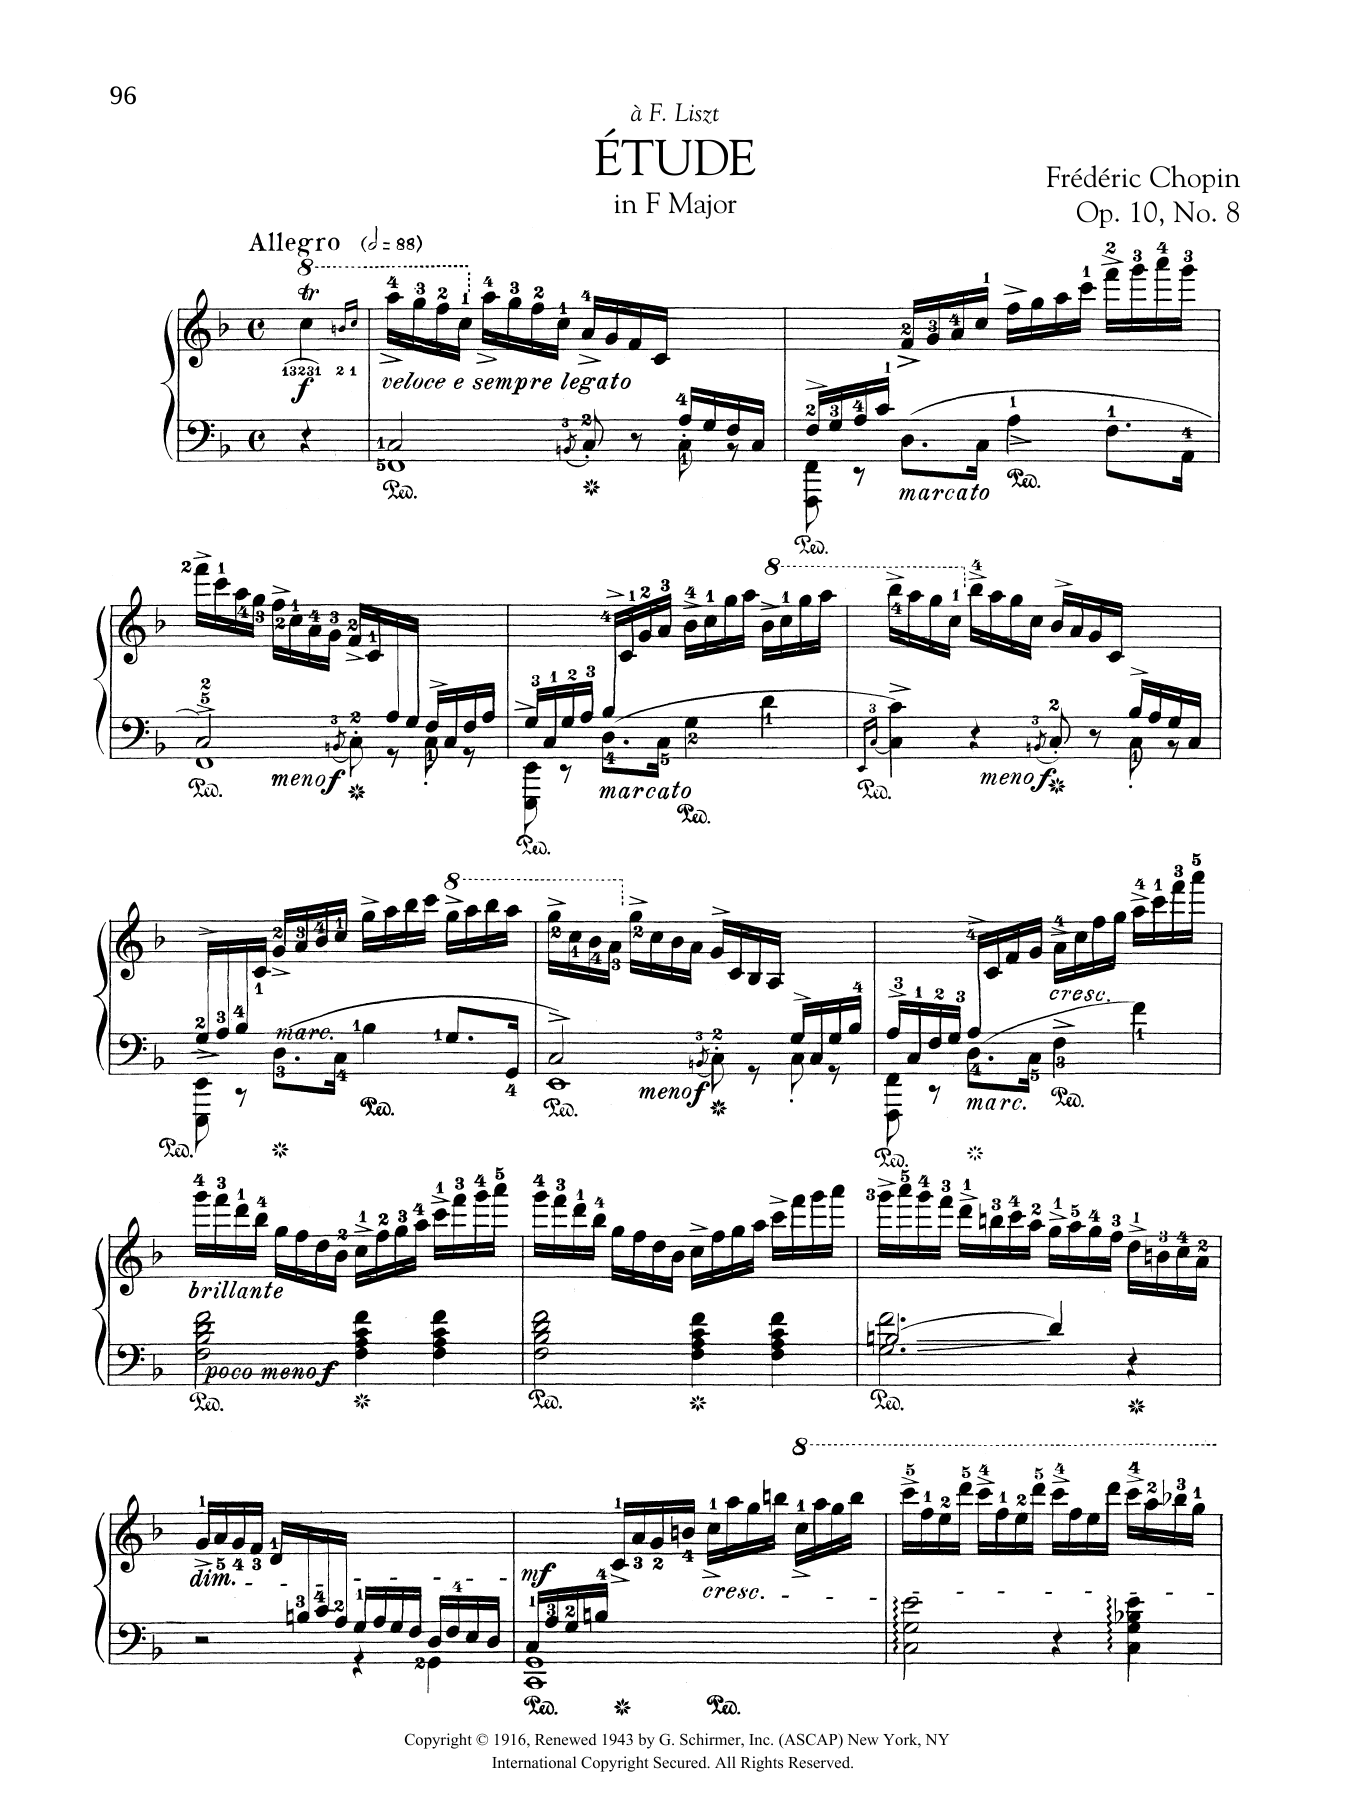 Download Frederic Chopin Etude in F Major, Op. 10, No. 8 Sheet Music